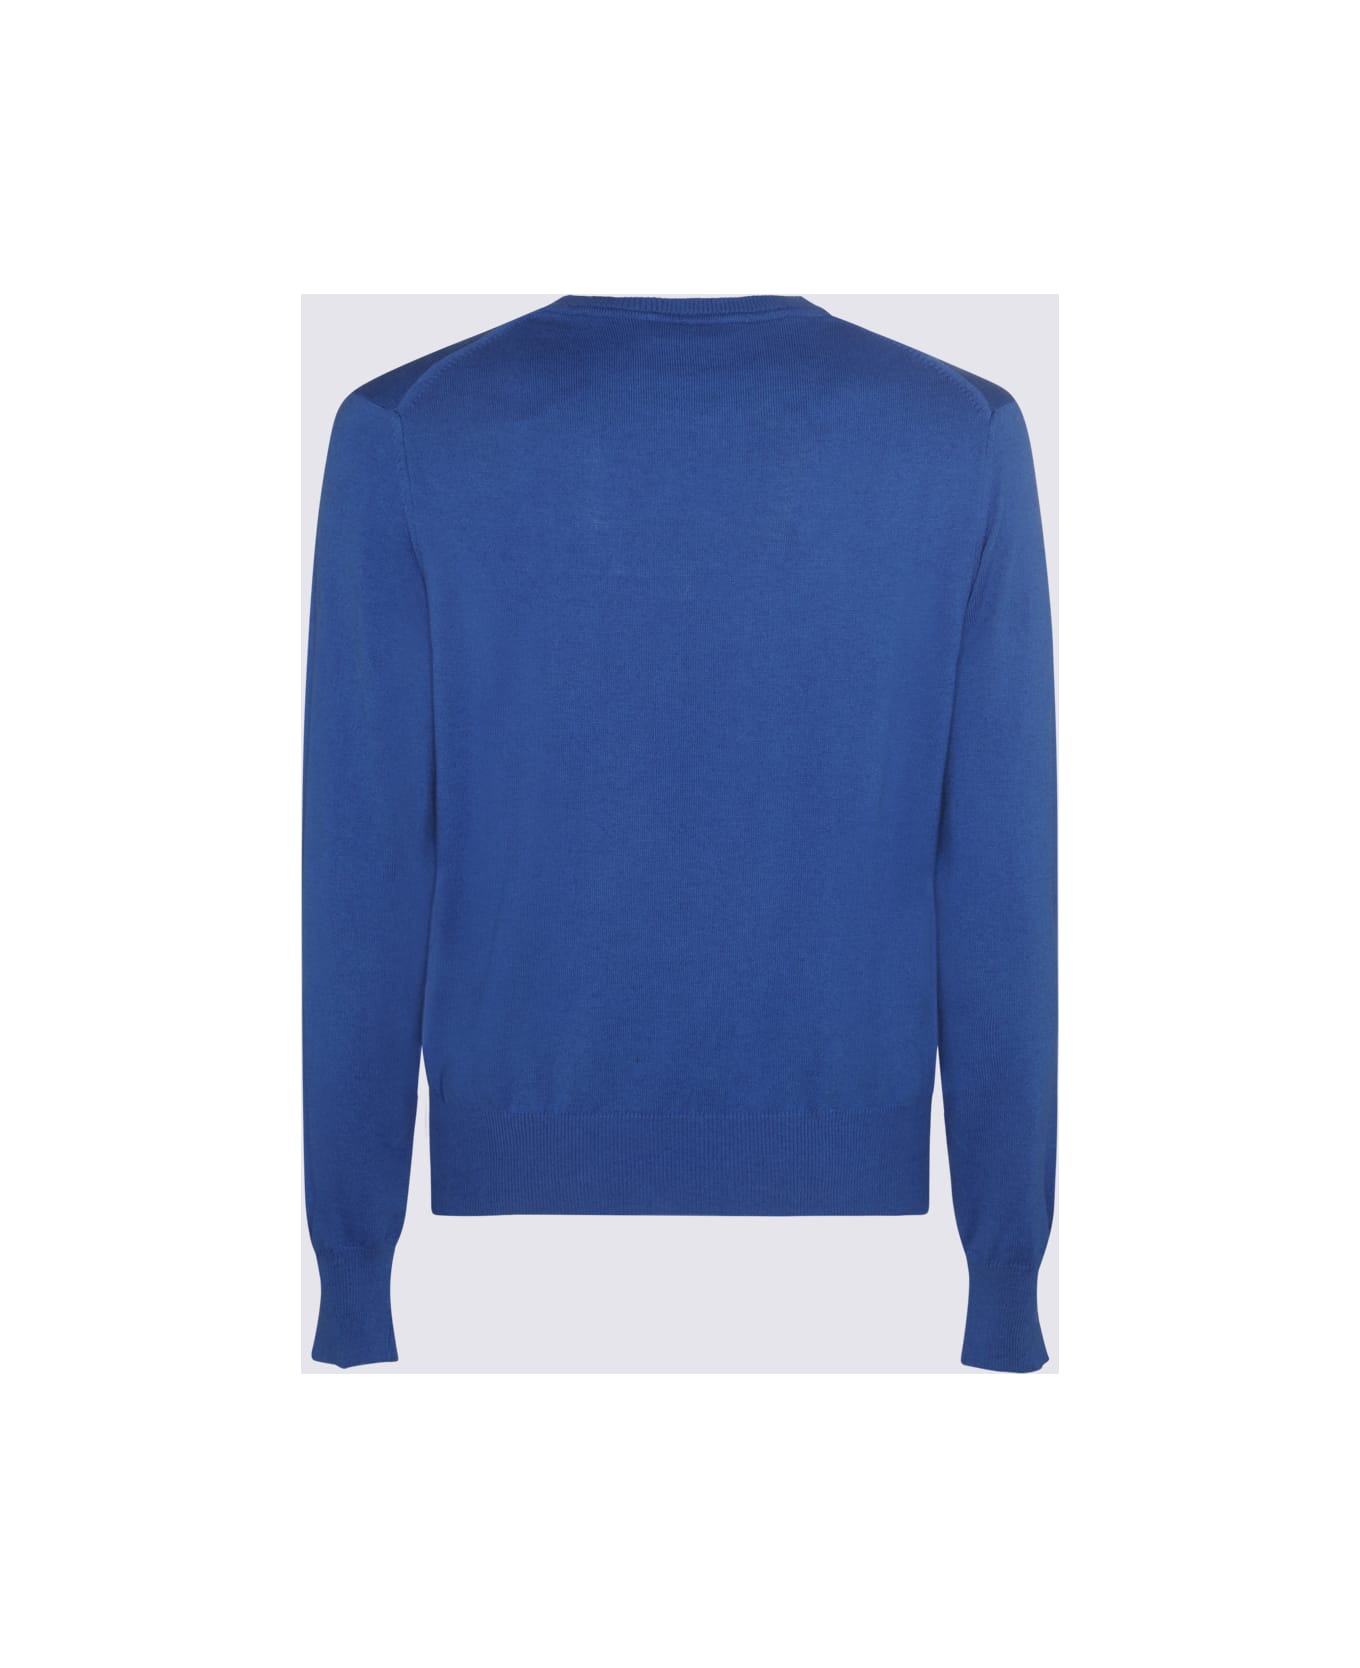 Vivienne Westwood Ocean Cotton And Cashmere Blend Sweater - OCEAN